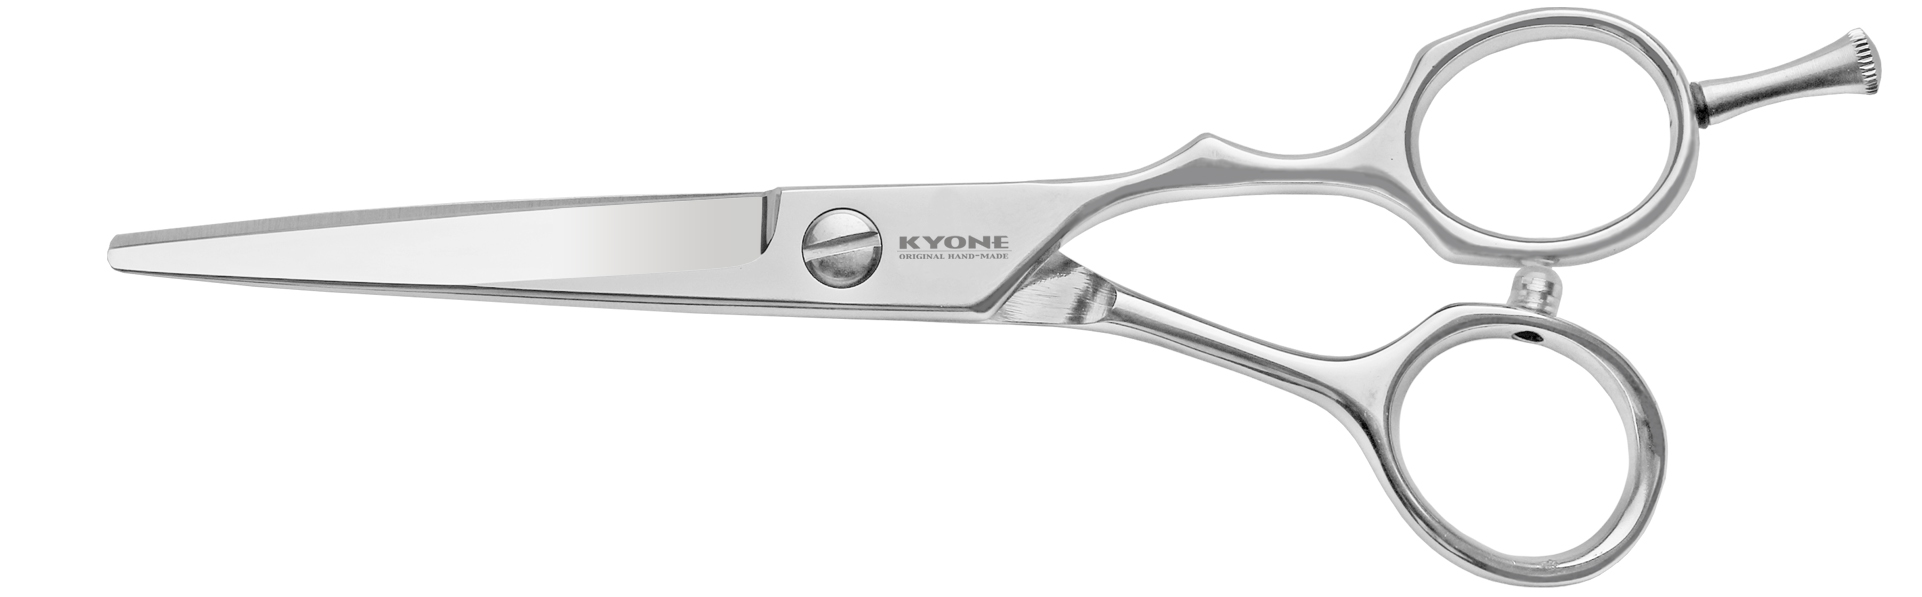 KYONE KNIP SCHAAR 1055  5.5 inch